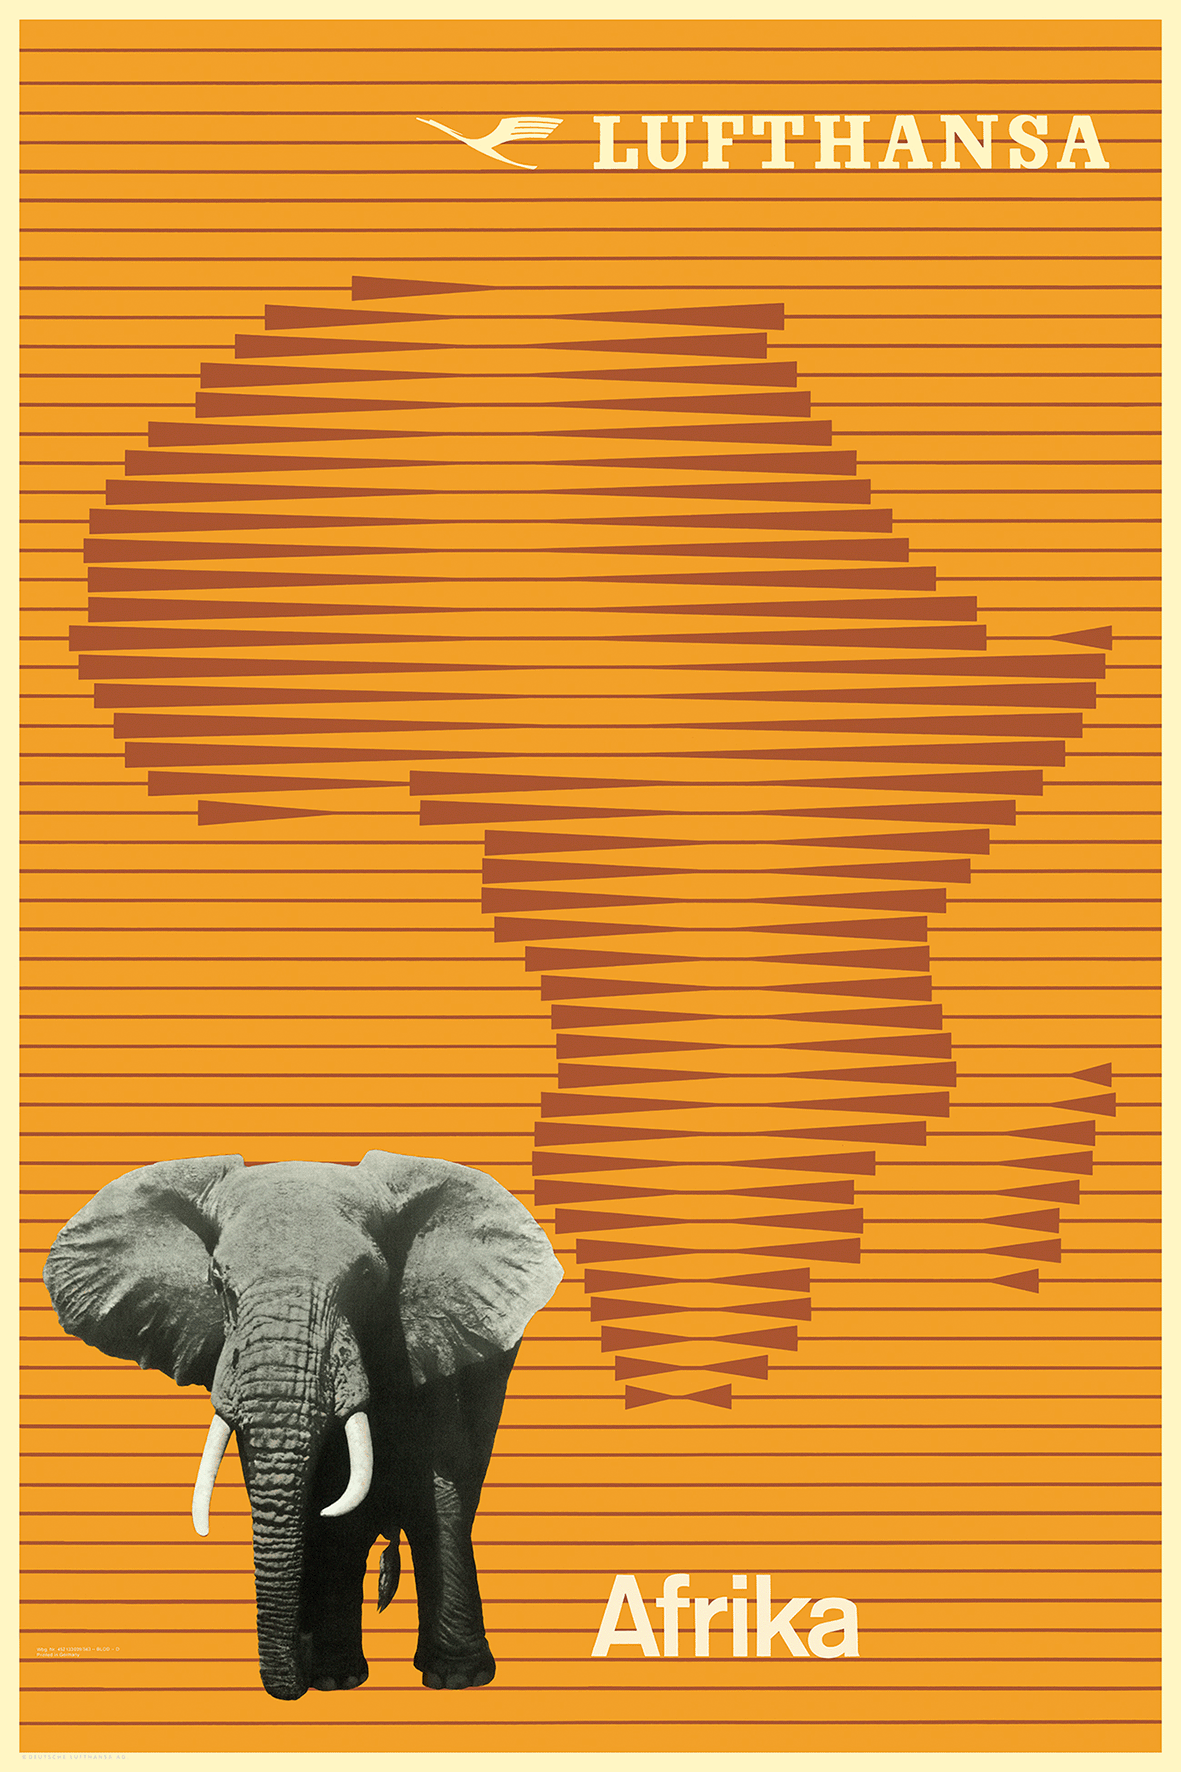 Lufthansa, Africa [Elephant].